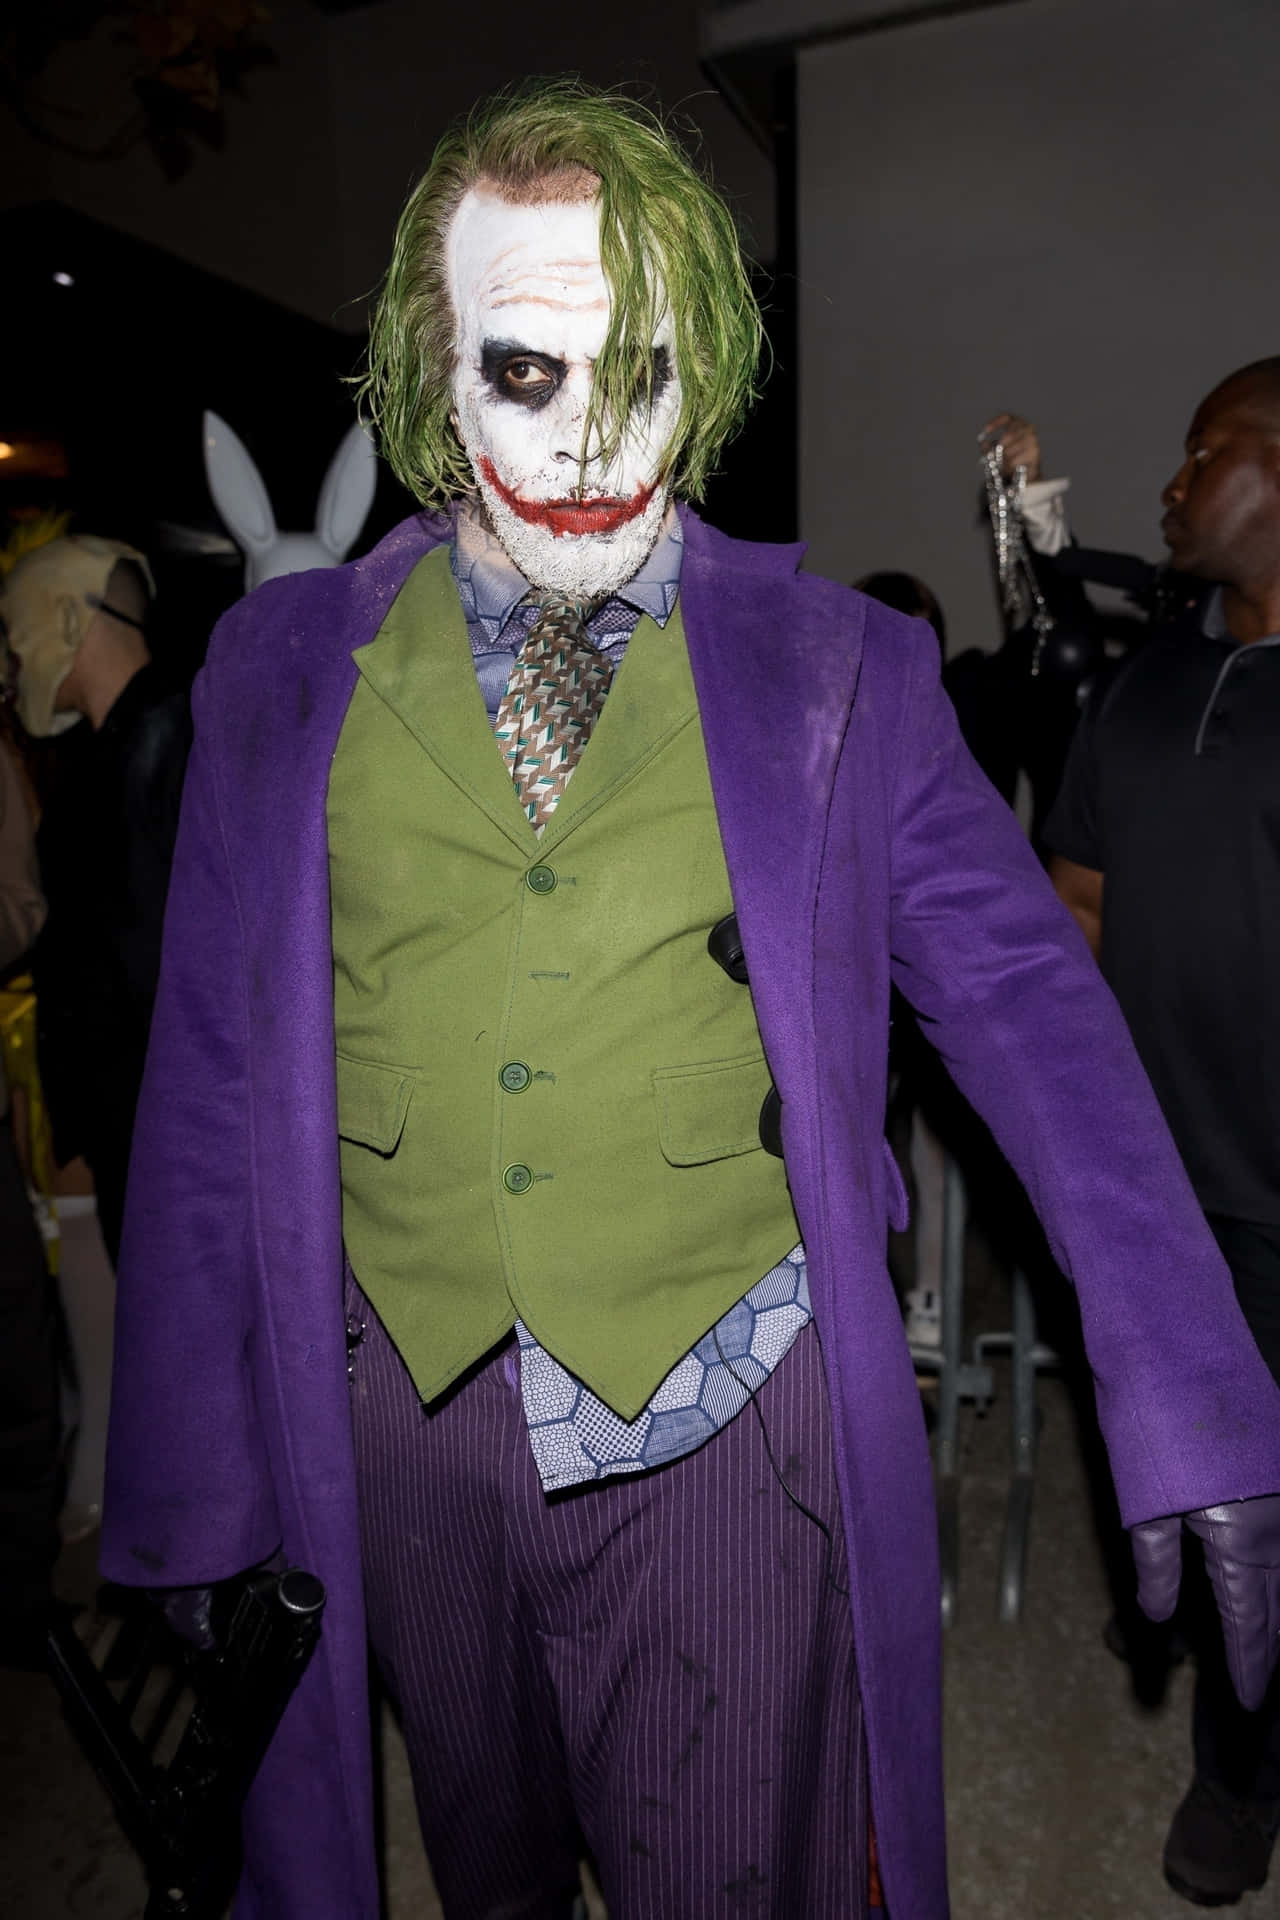 A Man Dressed As The Joker